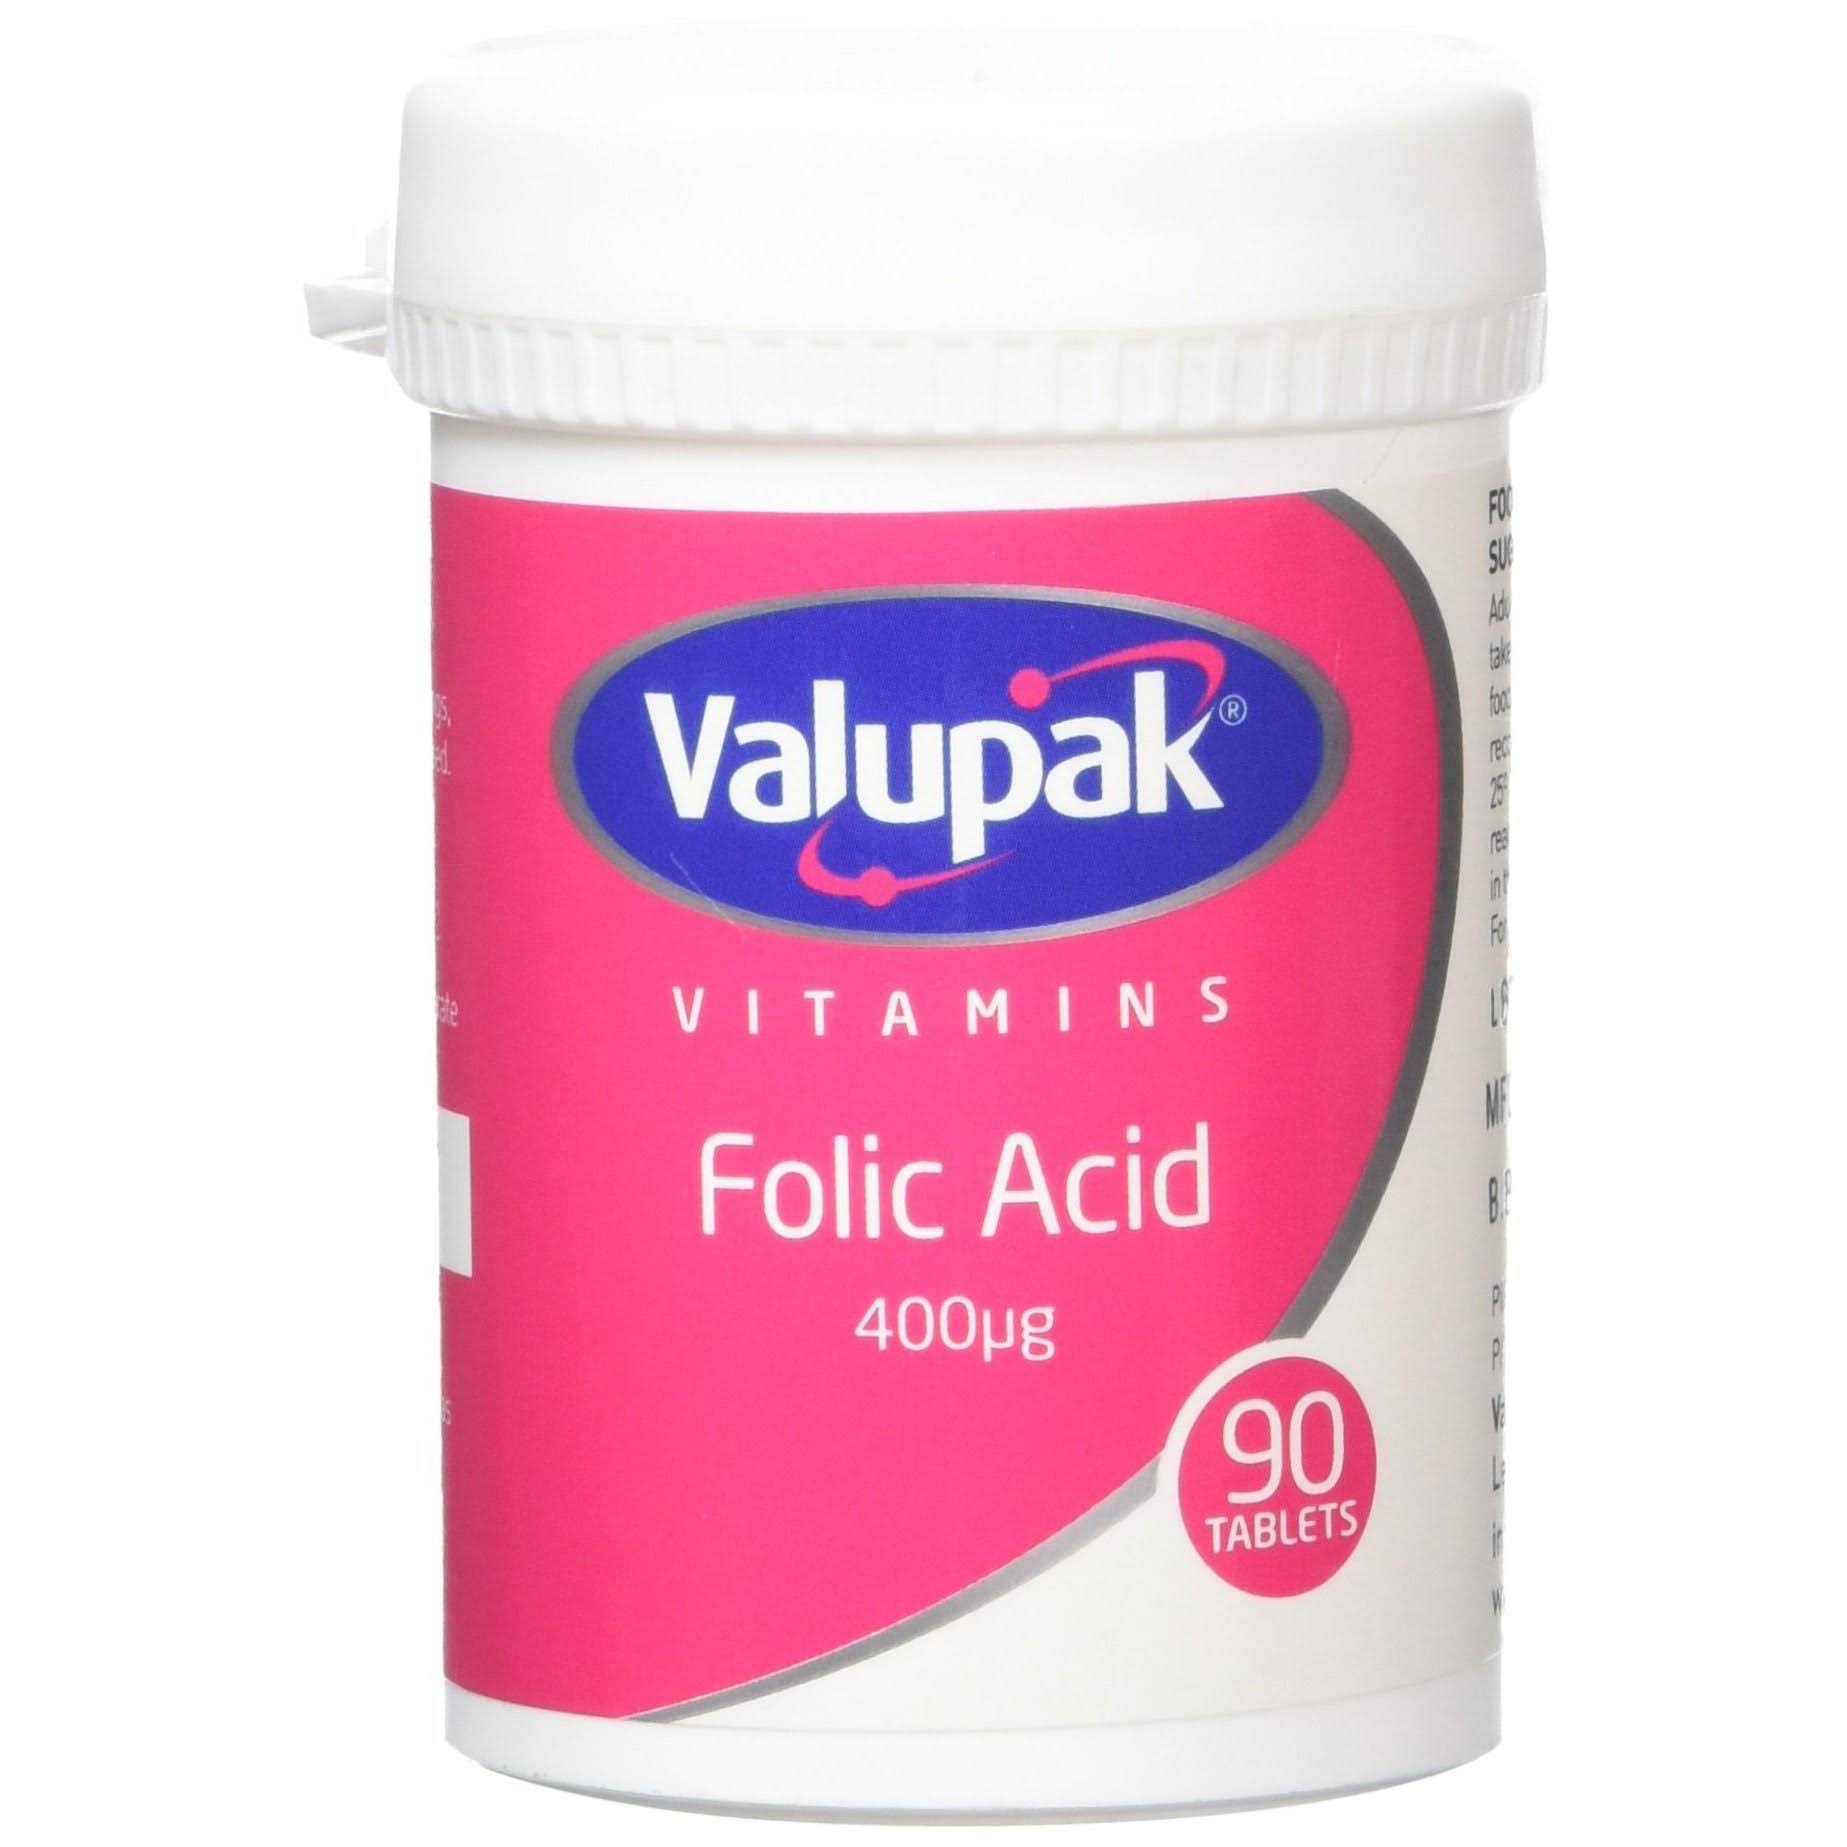 Valupak Vitamins Folic Acid Supplement - 90 Tablets